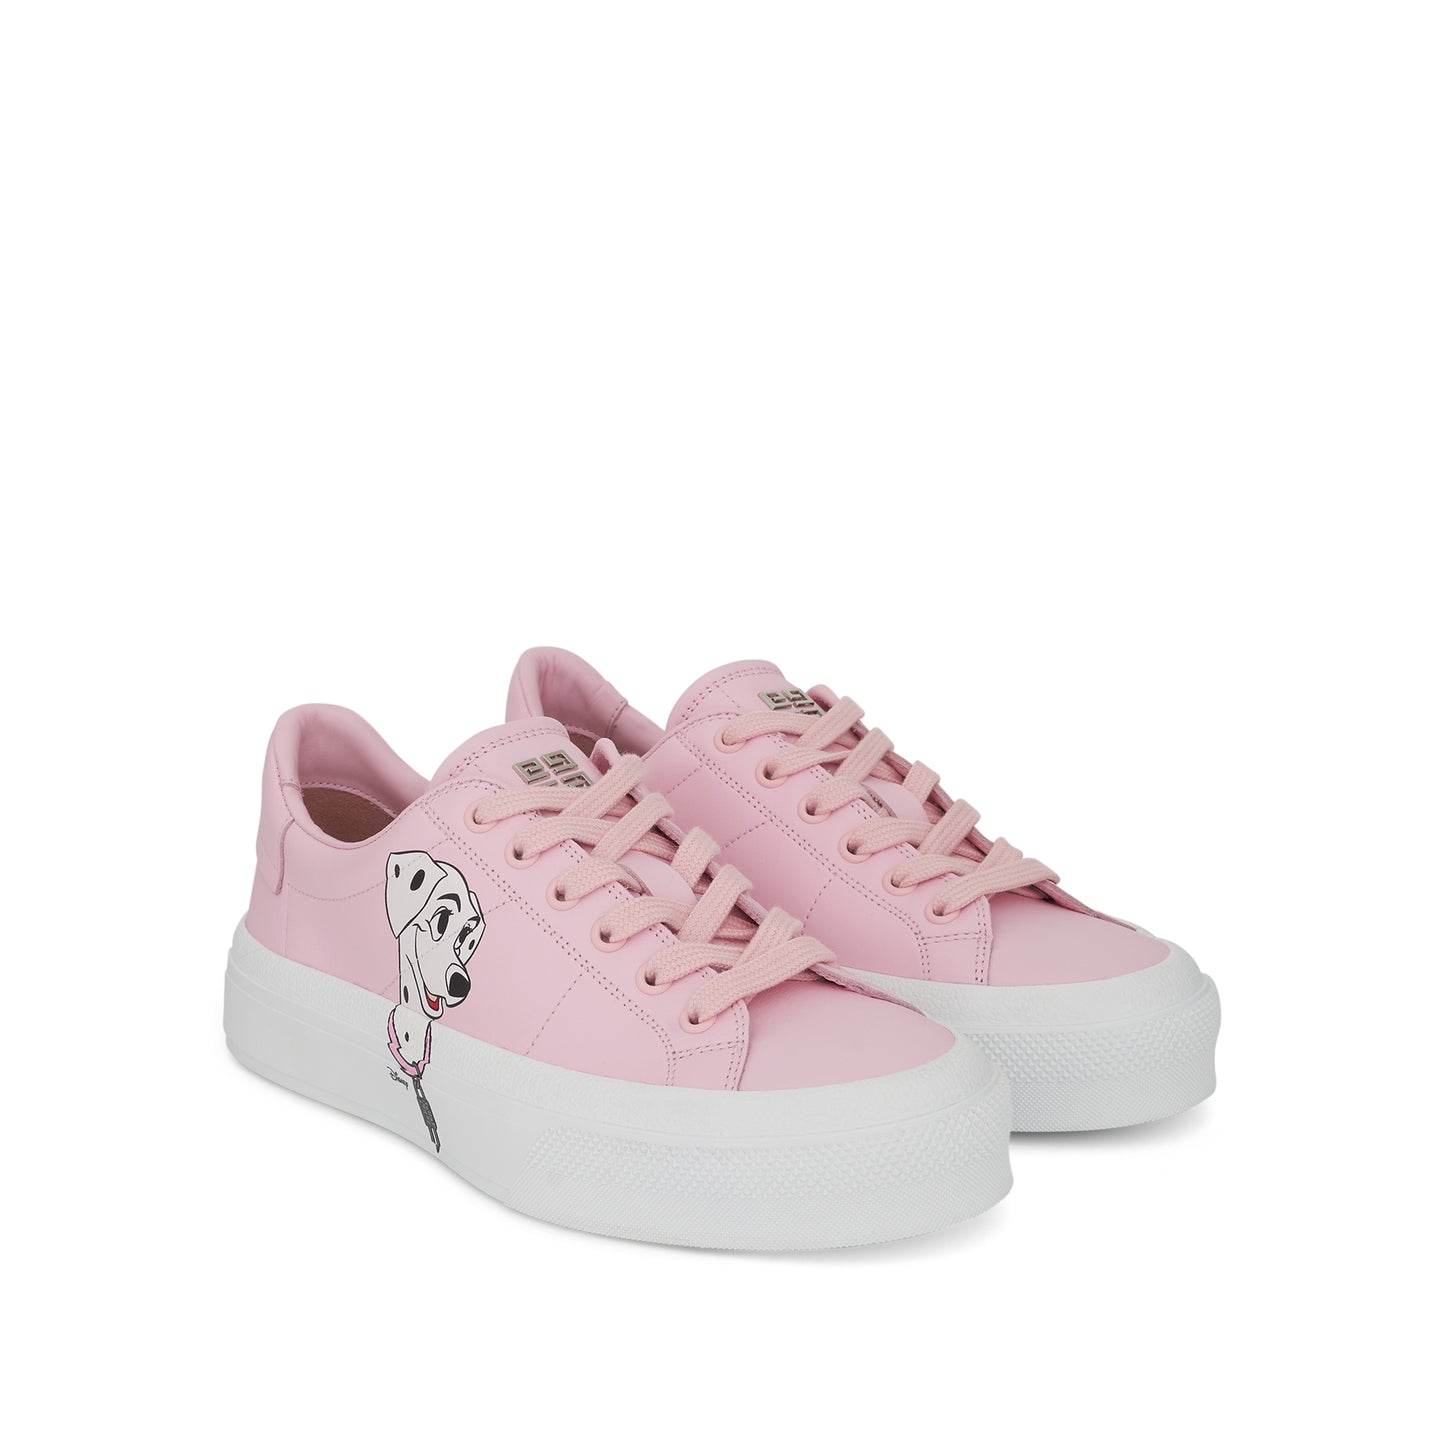 Disney 101 Dalmatians City Sport Sneaker in Blossom Pink